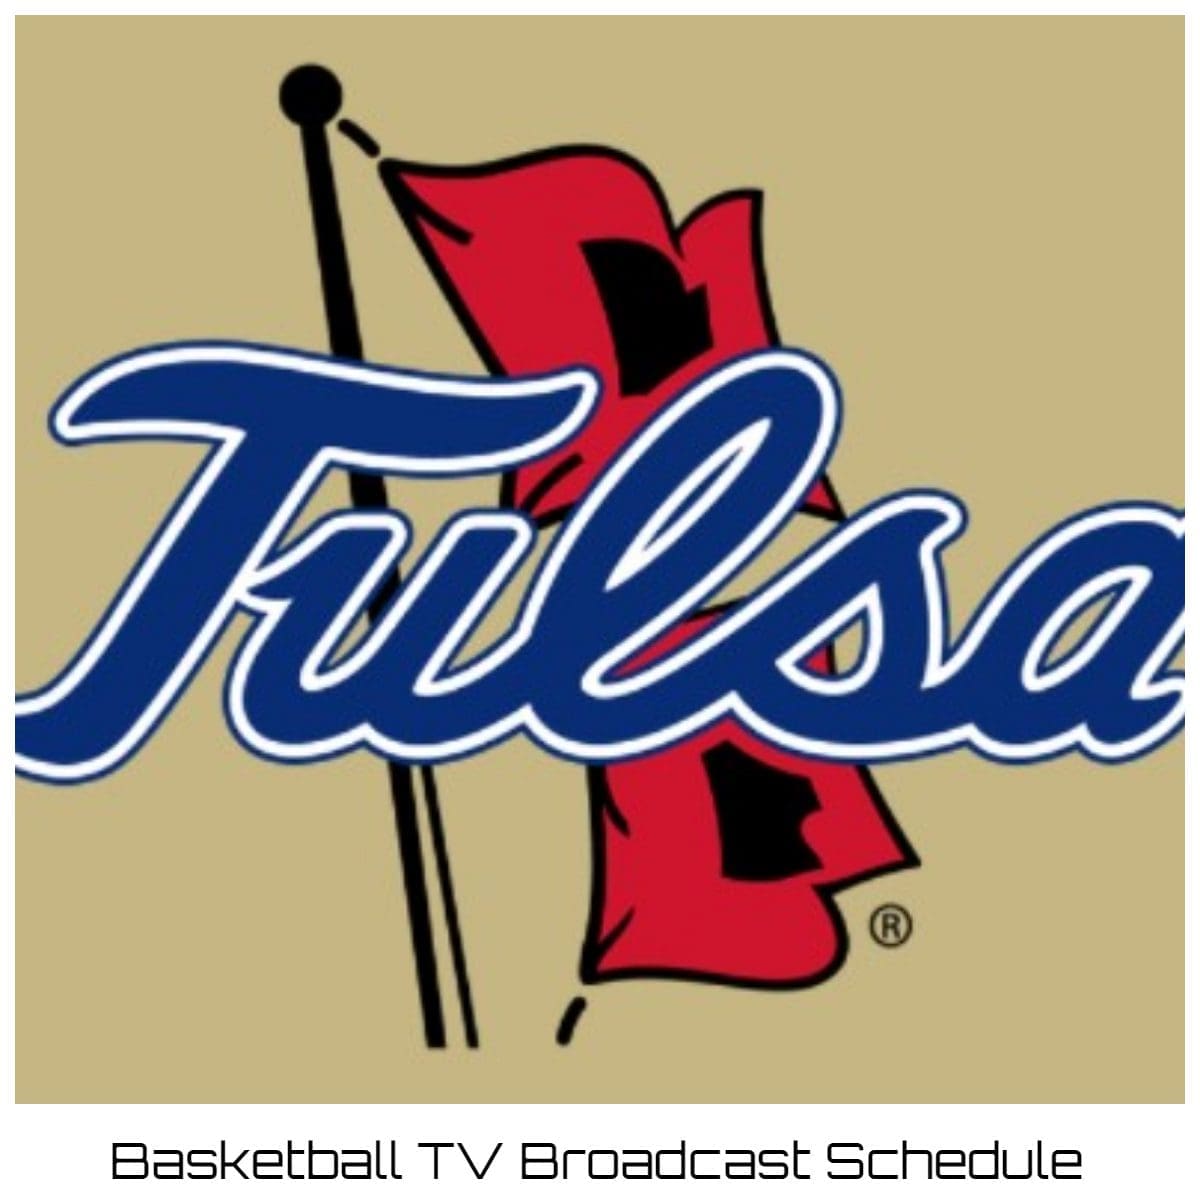 Tulsa Golden Hurricane Basketball TV Broadcast Schedule